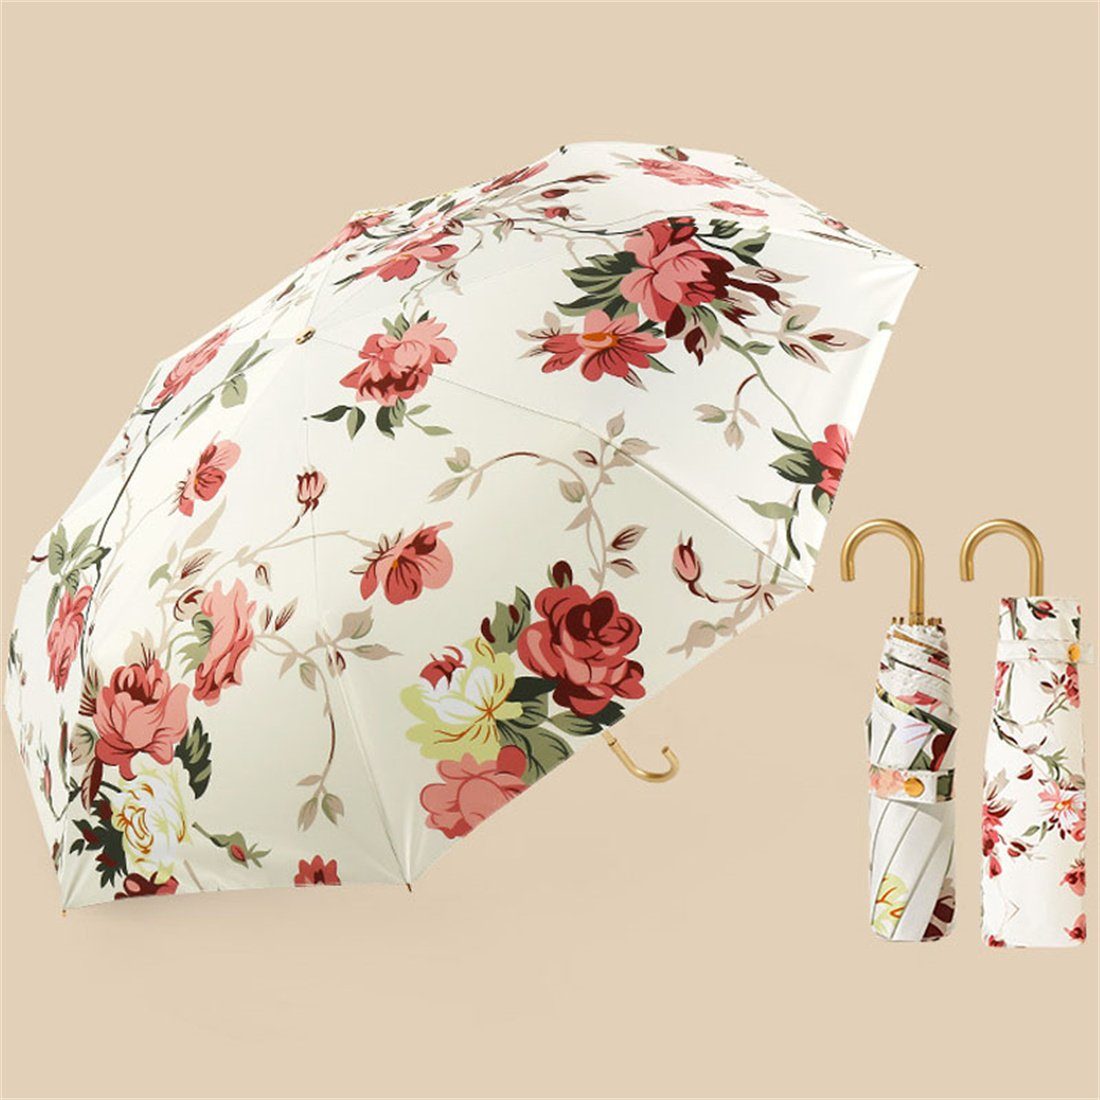 DÖRÖY Taschenregenschirm UV-Faltschirm,Tragbarer Regenschirm,Goldener Haken-Regenschirm